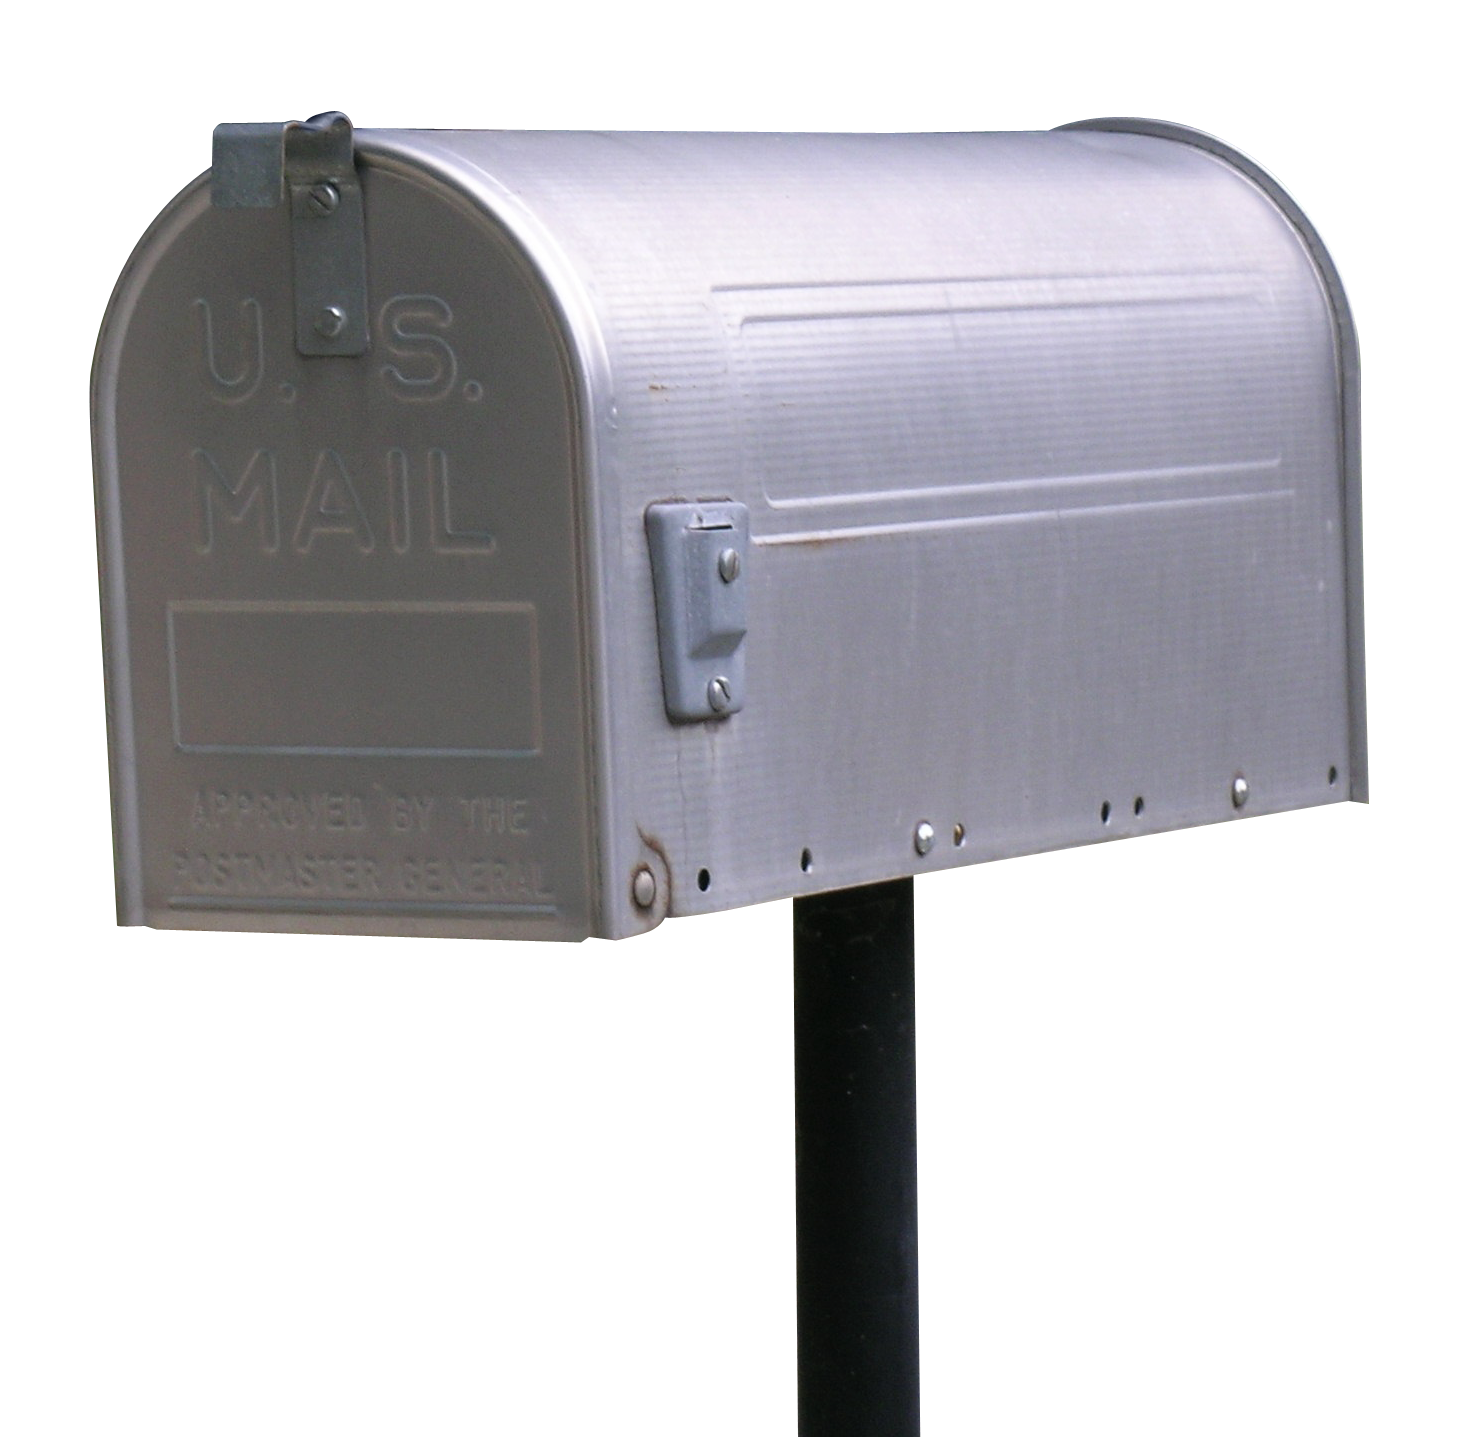 Mailbox Png File PNG Image